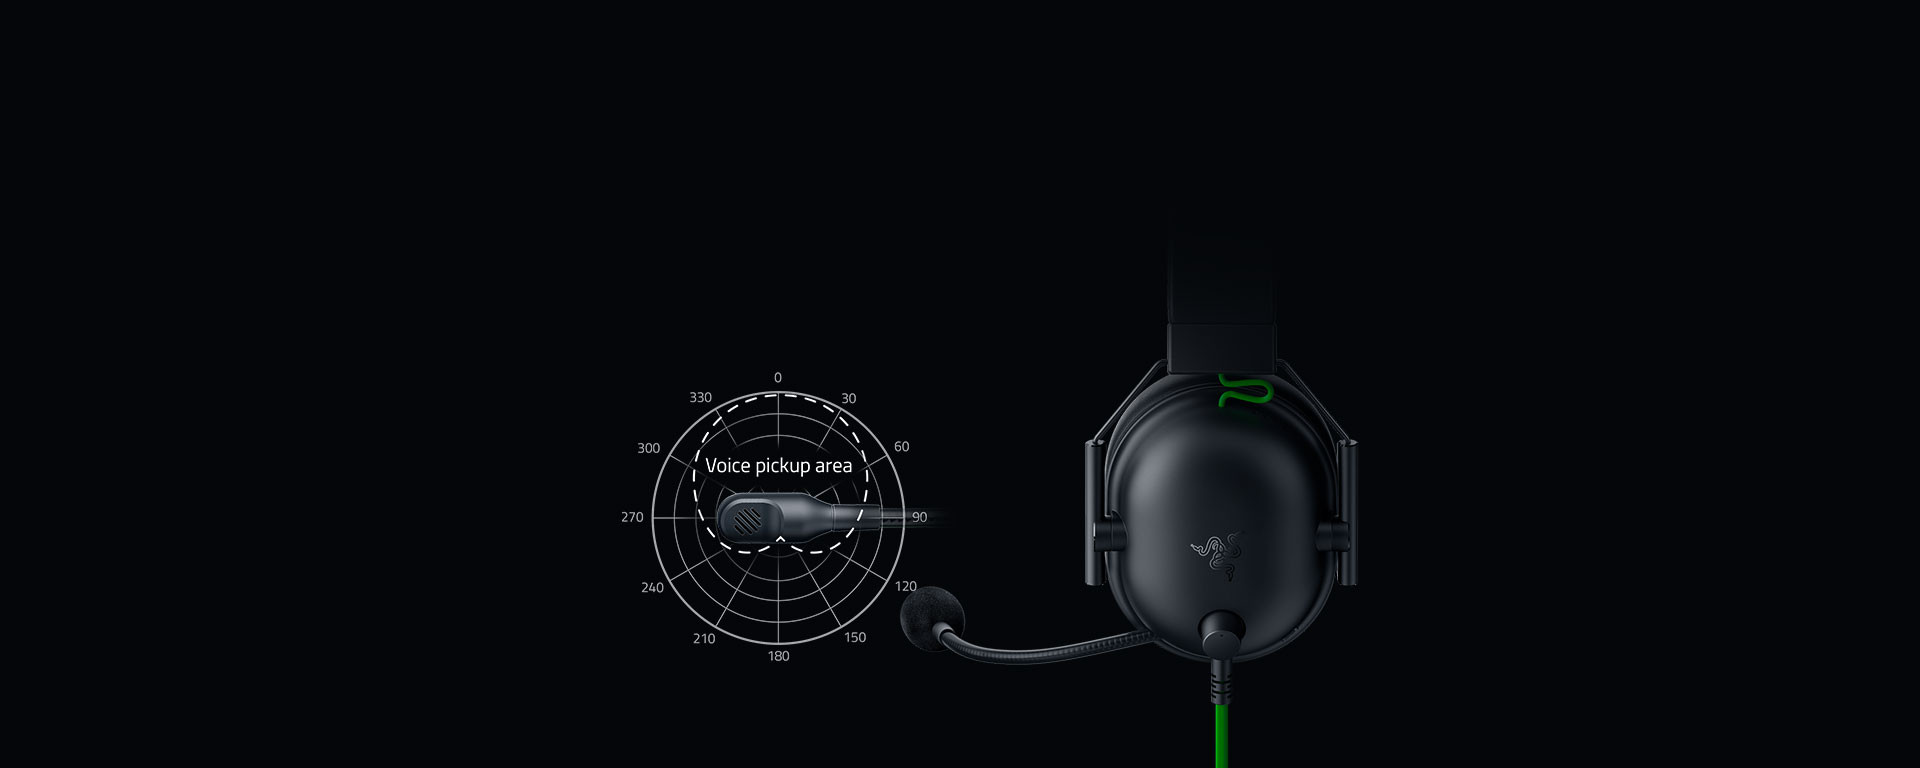 Razer BlackShark V2 X Gaming Wired Headphones